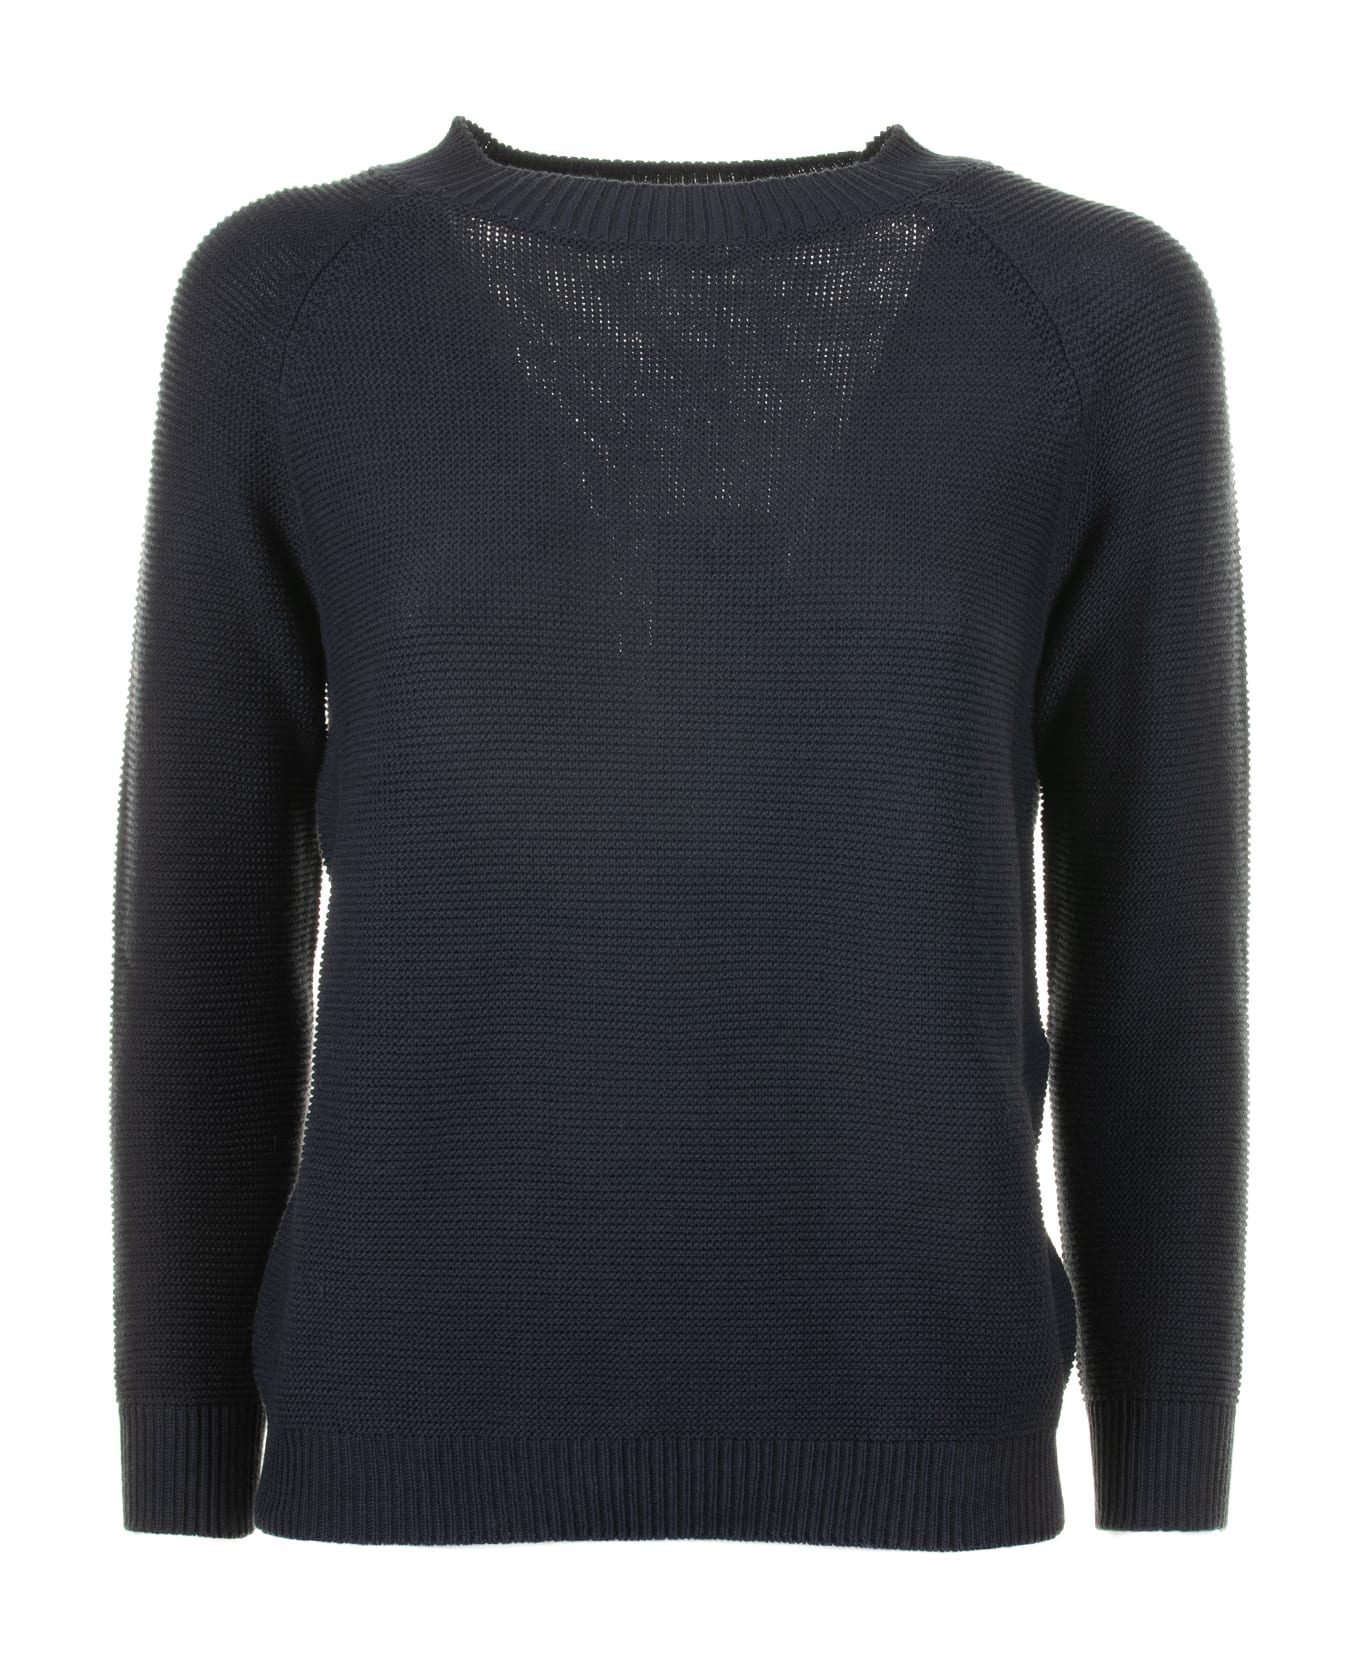 Weekend Max Mara Soft Navy Blue Cotton Sweater - NAVY ニットウェア